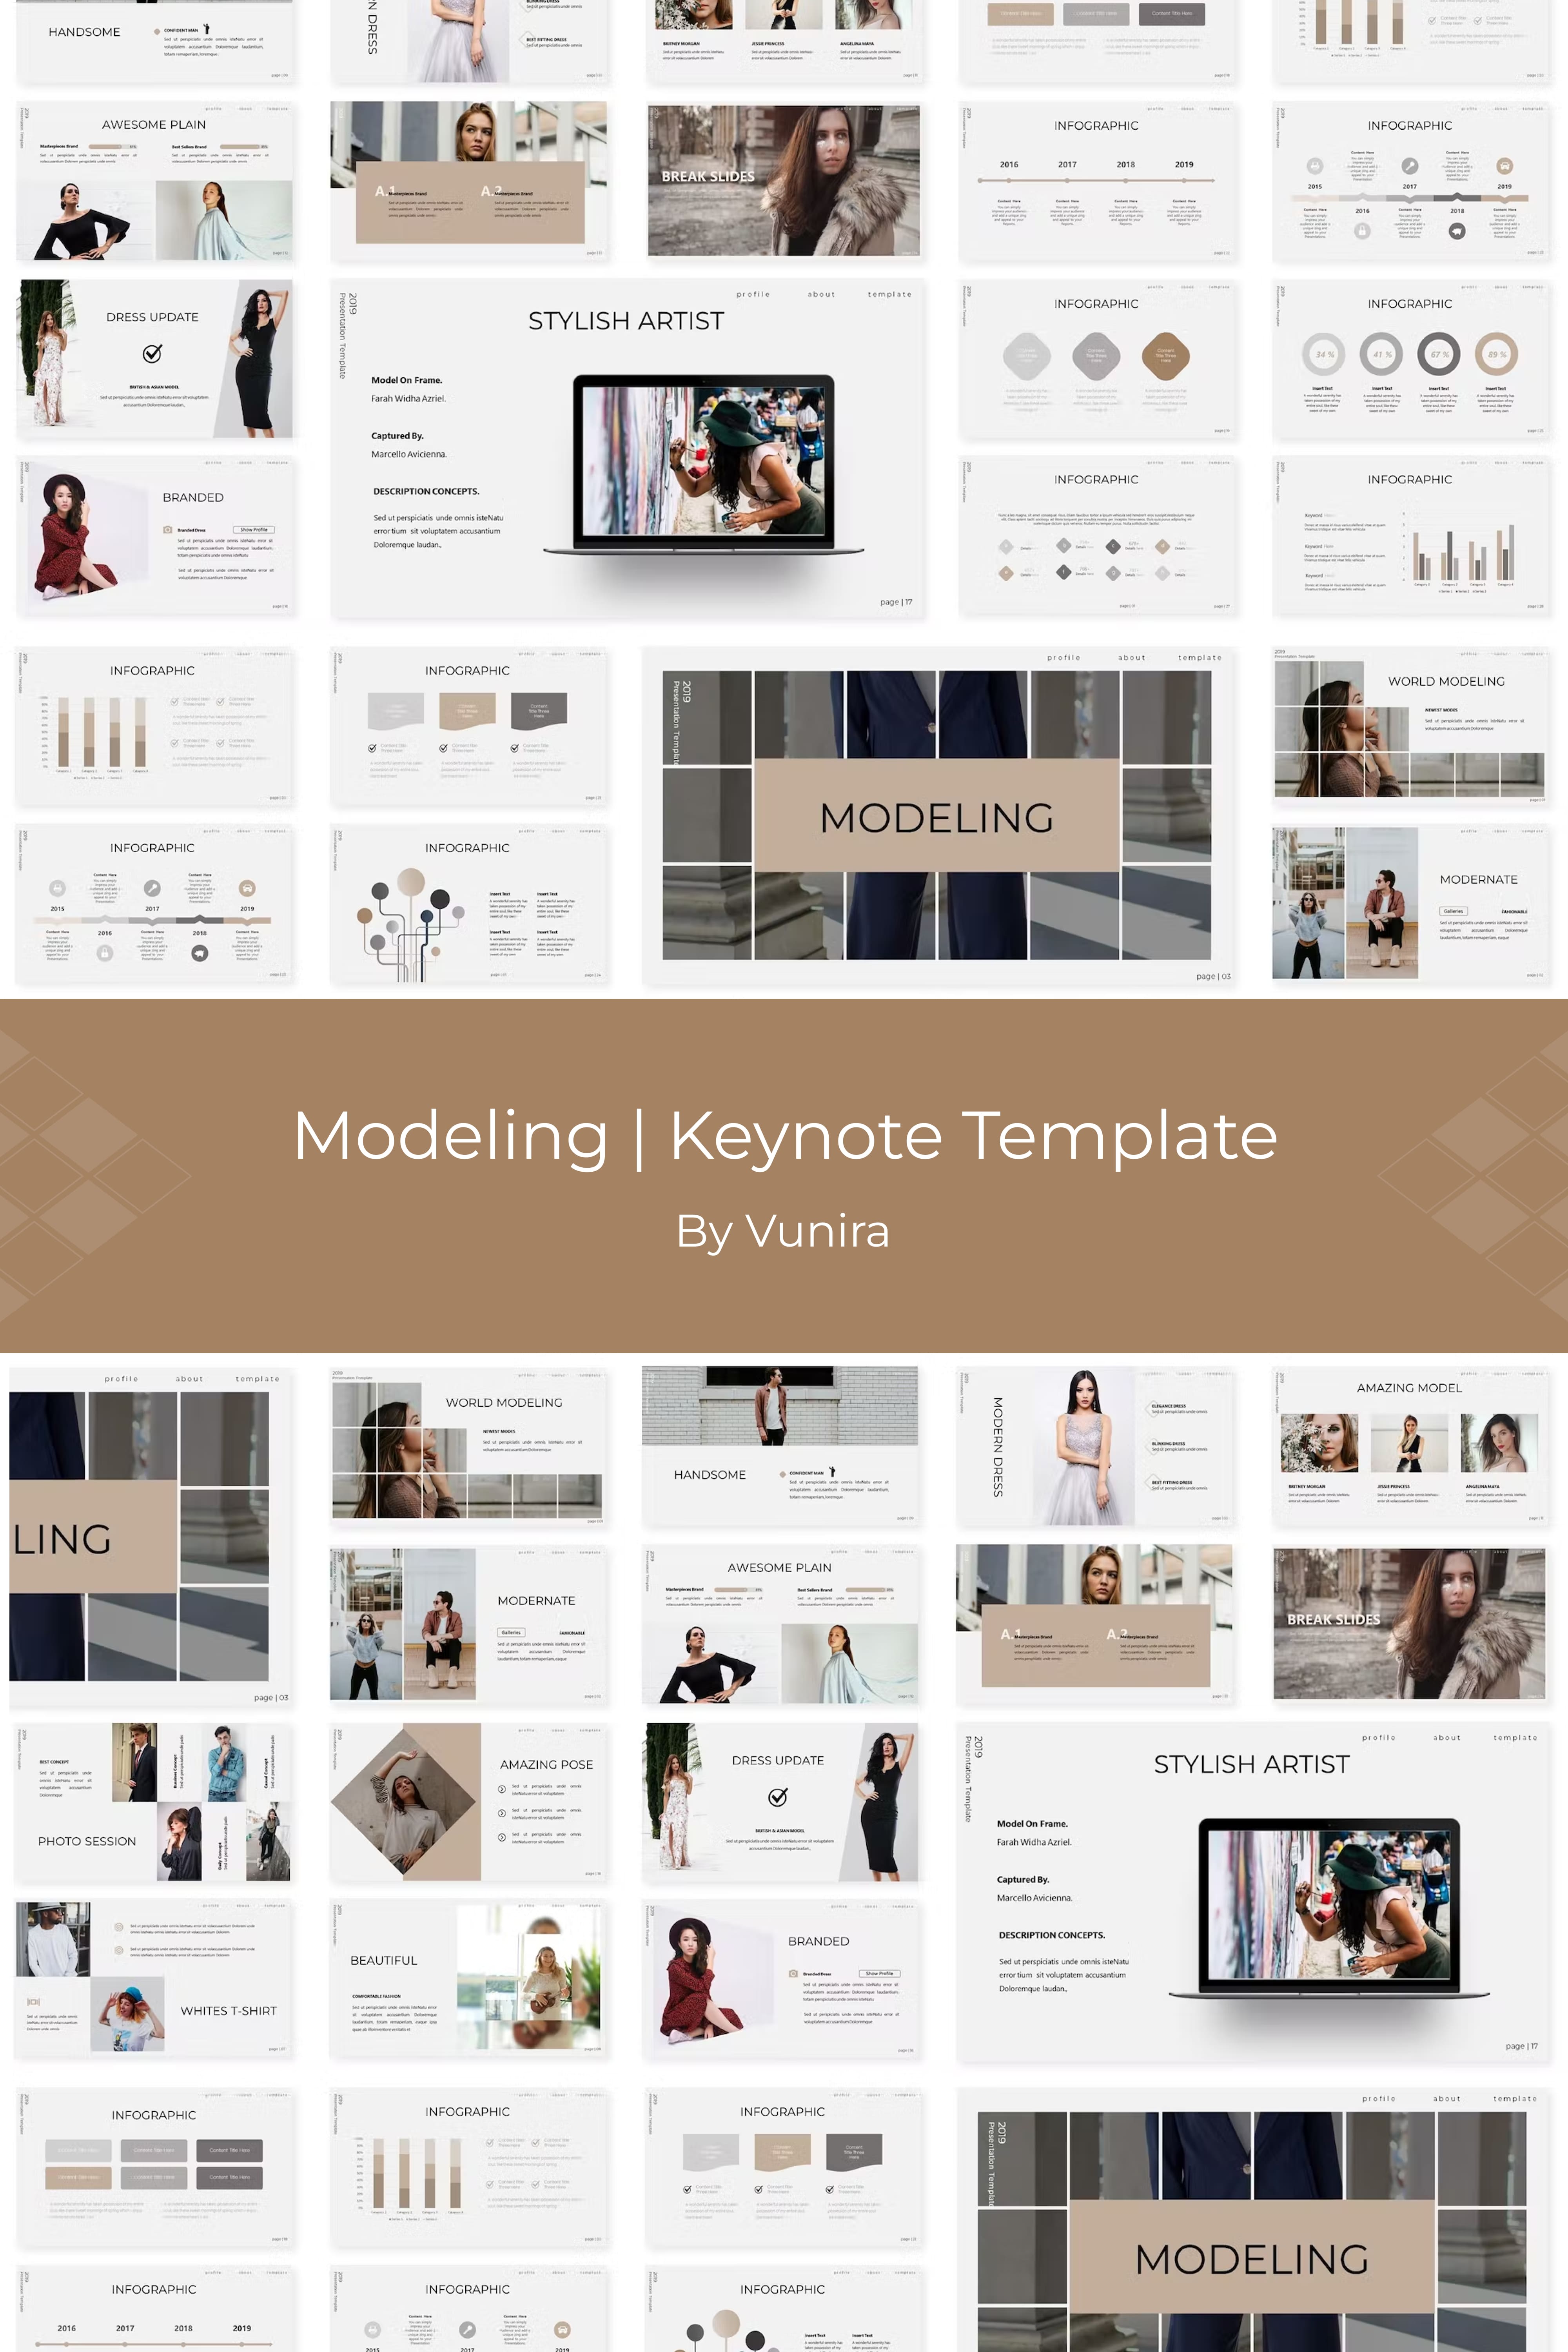 Modeling | Keynote Template - Pinterest.